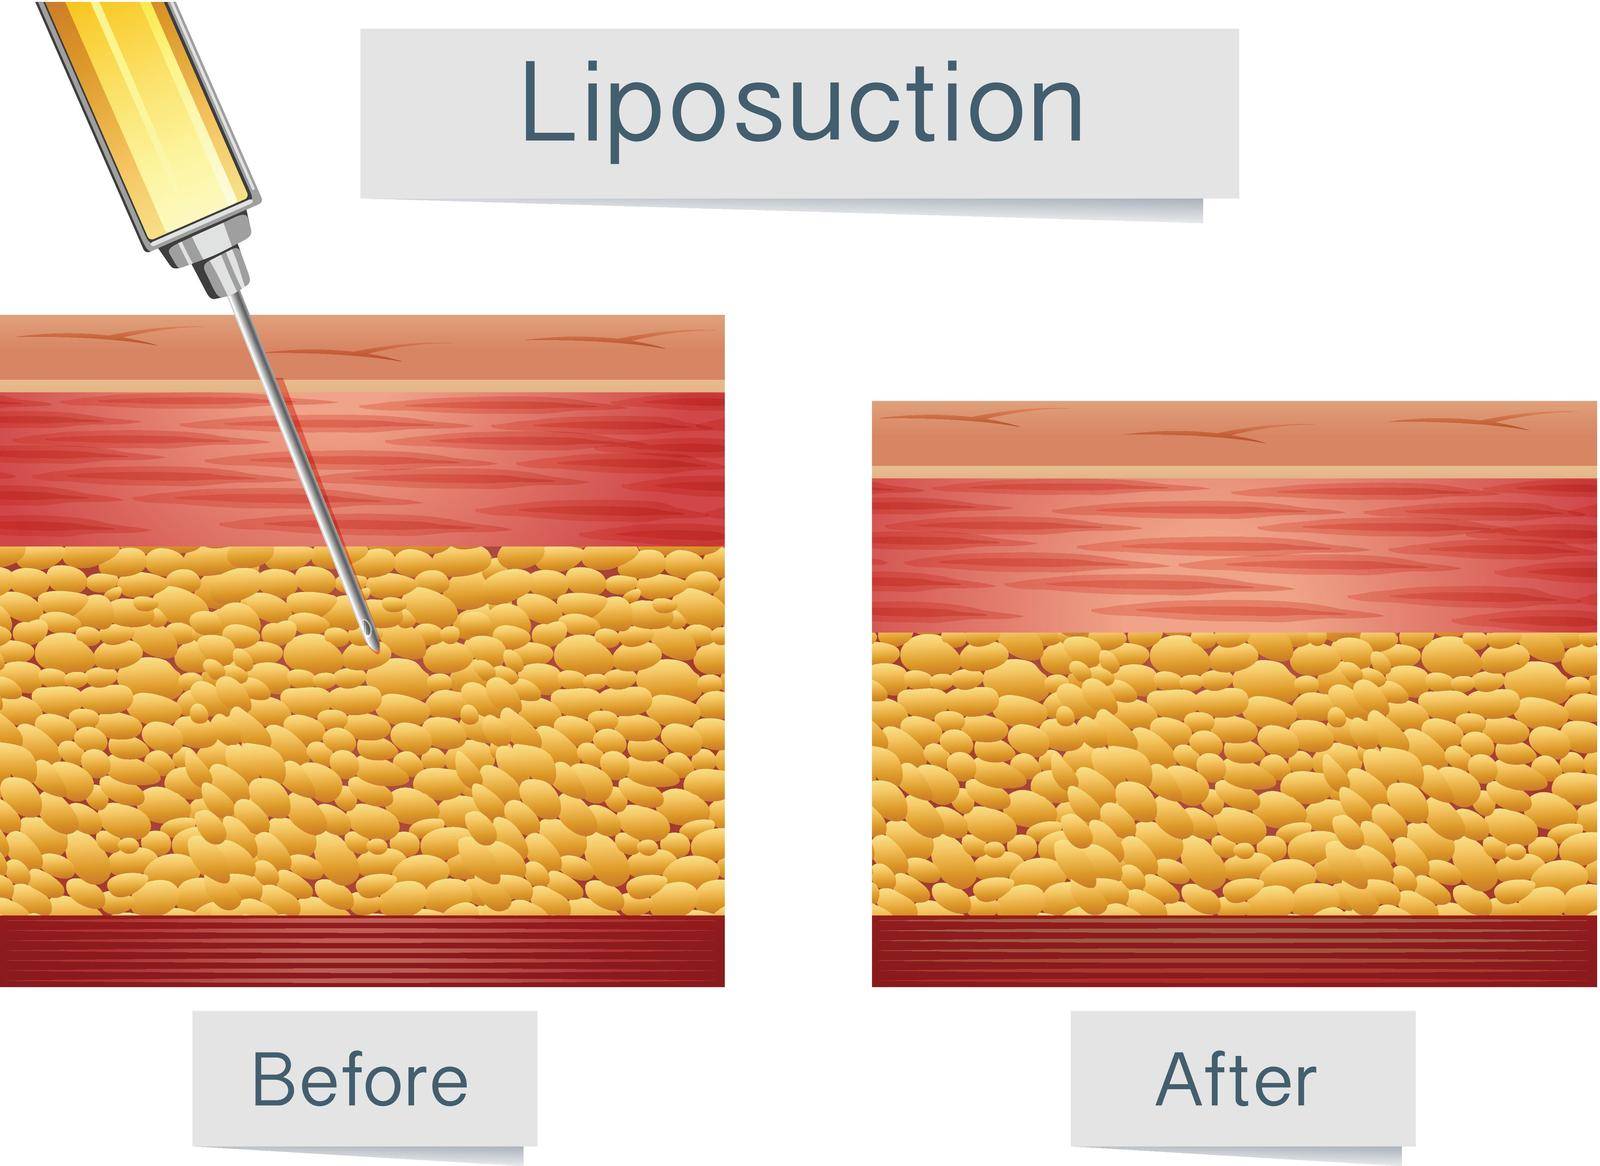 Liposuction Medical Treatment and Comparison illustration